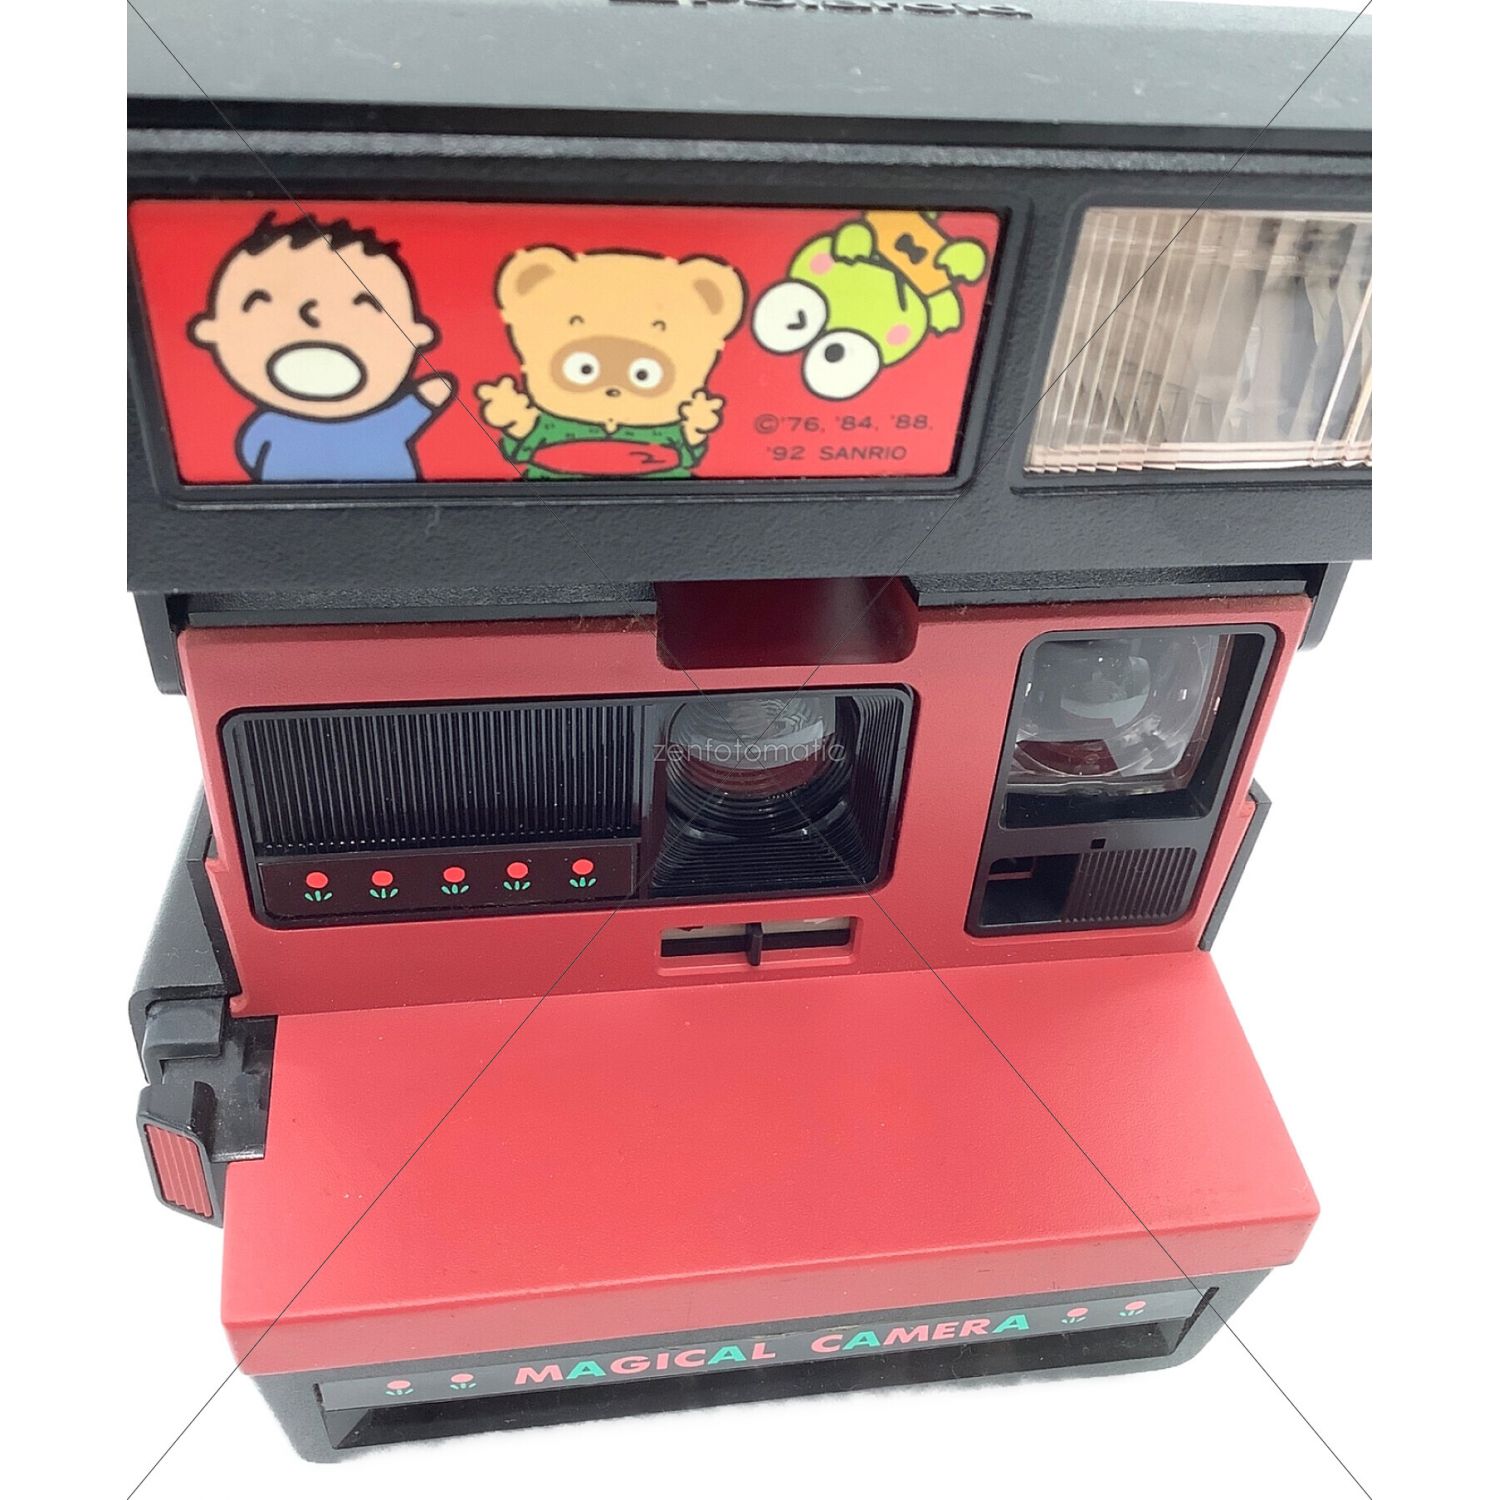 Sanrio (サンリオ) マジカルカメラ Polaroid ジャンクとして 動作